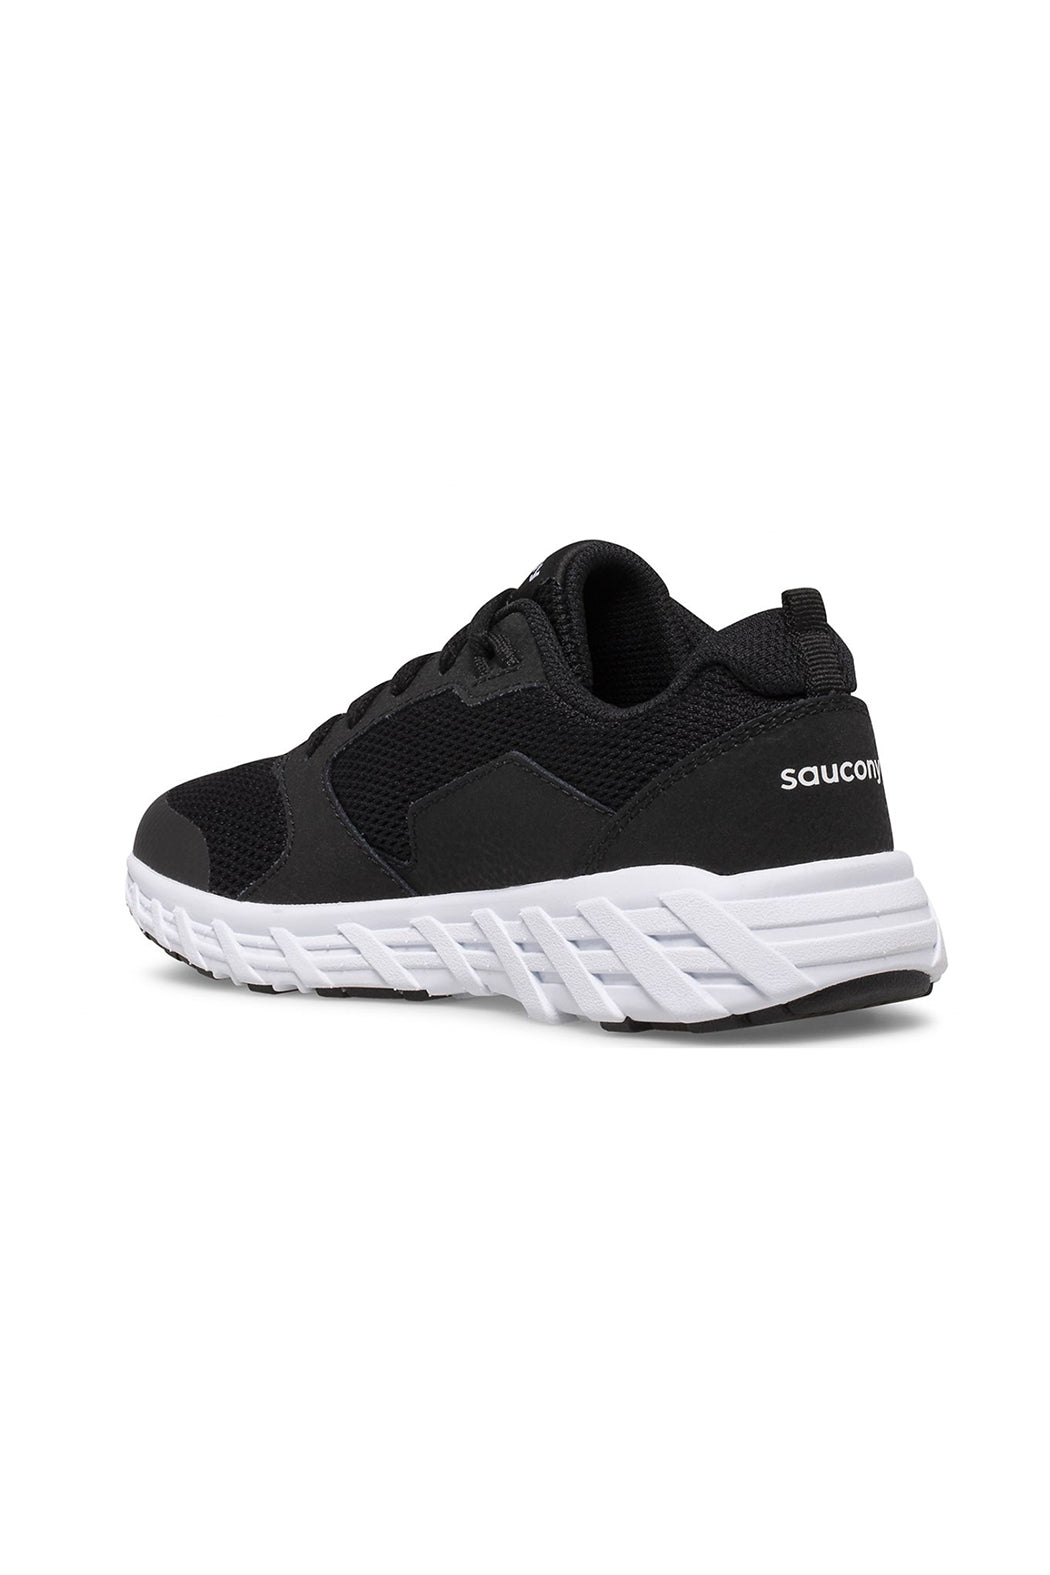 Saucony Wind 2.0 Sneaker - Black/White